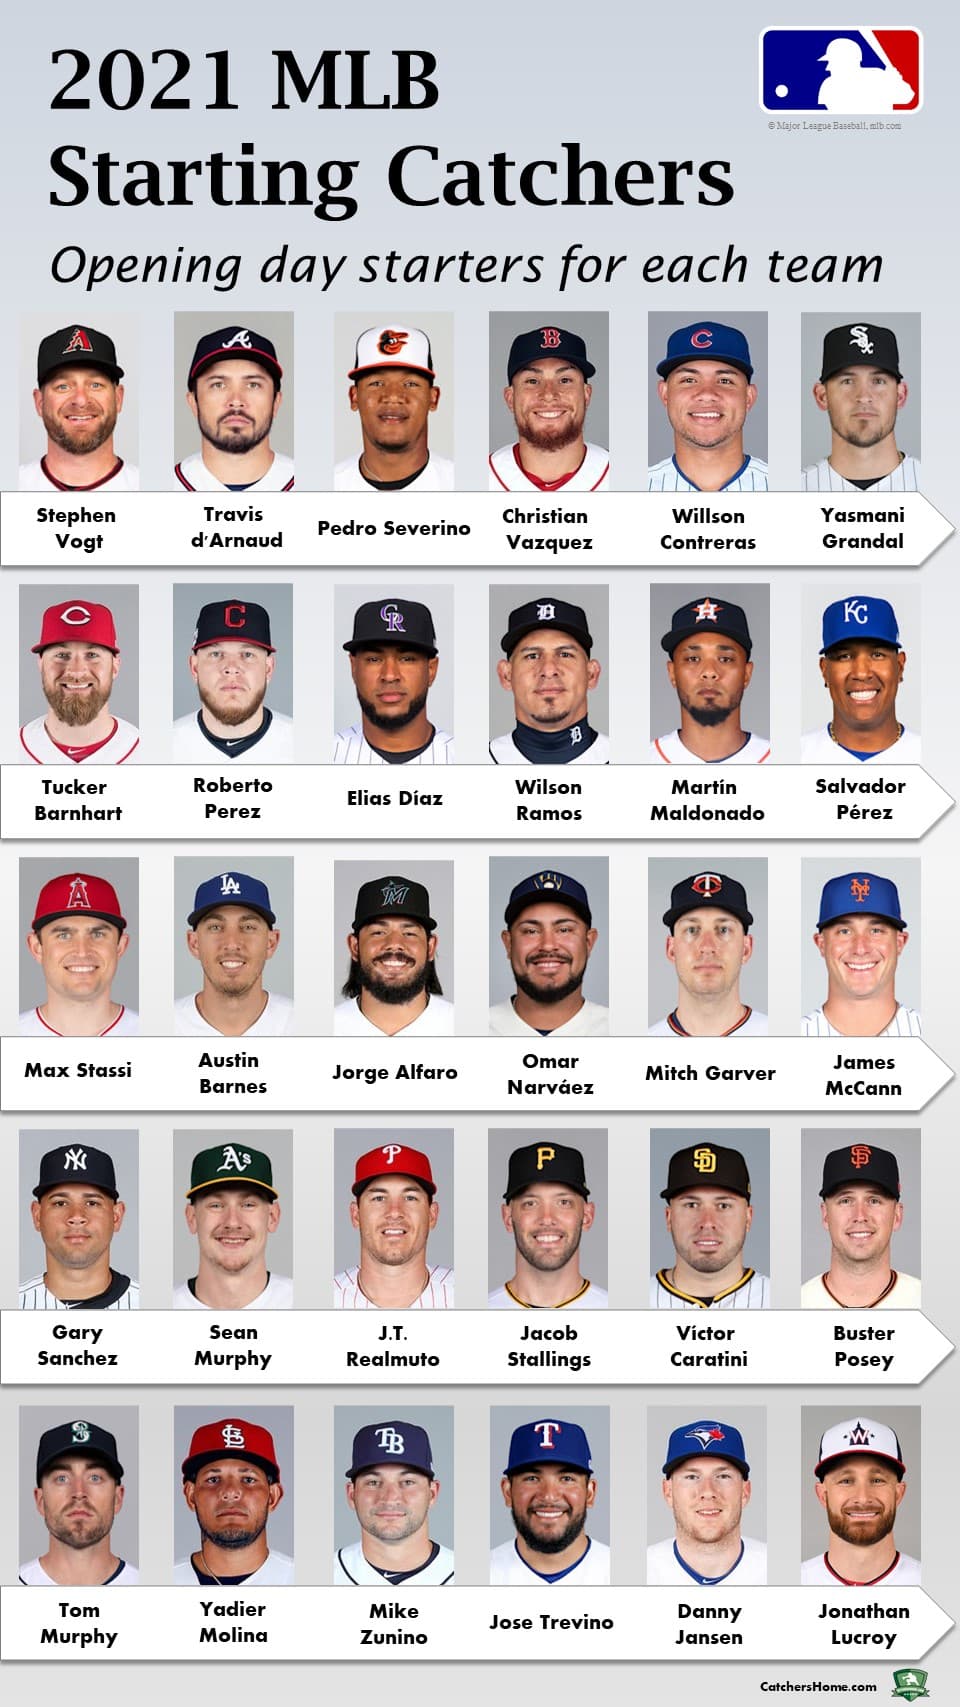 2021 MLB Catchers, Baseball catchers, current list of catchers 2021 opening day starting catchers